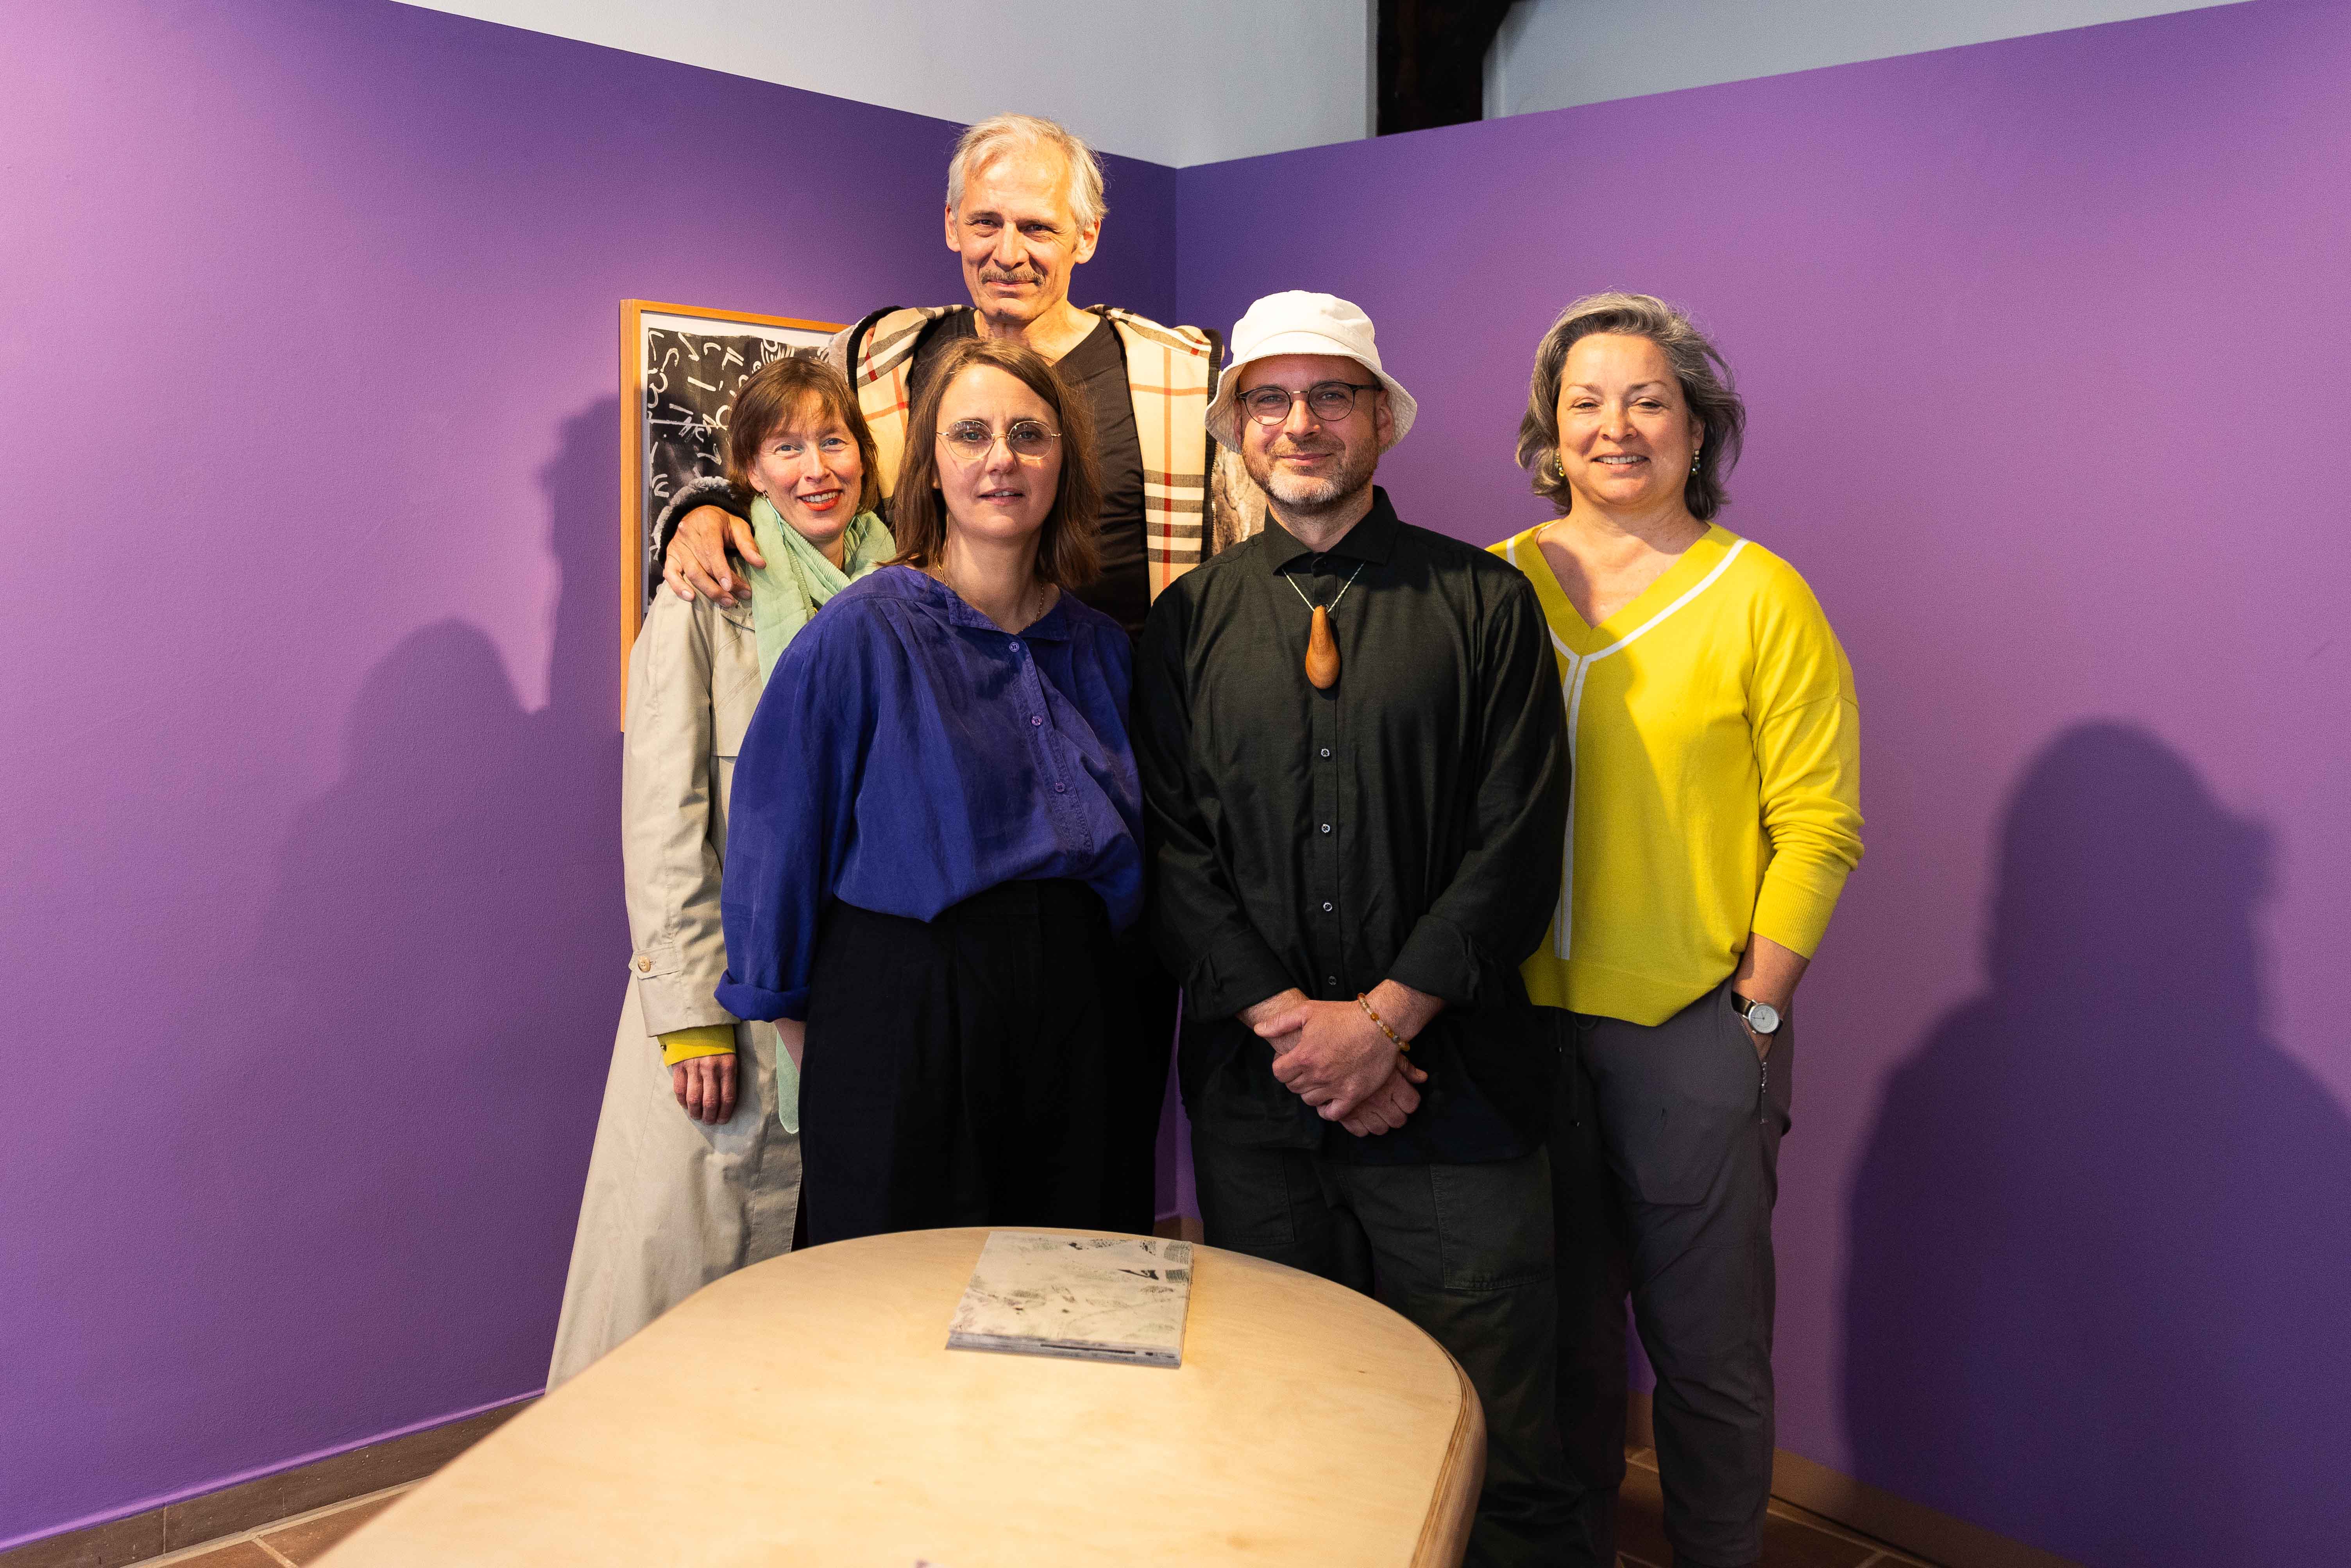 from left: Lotte Lindner and Till Steinbrenner, Hanover, Constanze Böhm artist, Maximilian Neumann, artist and Eva Kienle KWS board member. Image author: Andre Germar